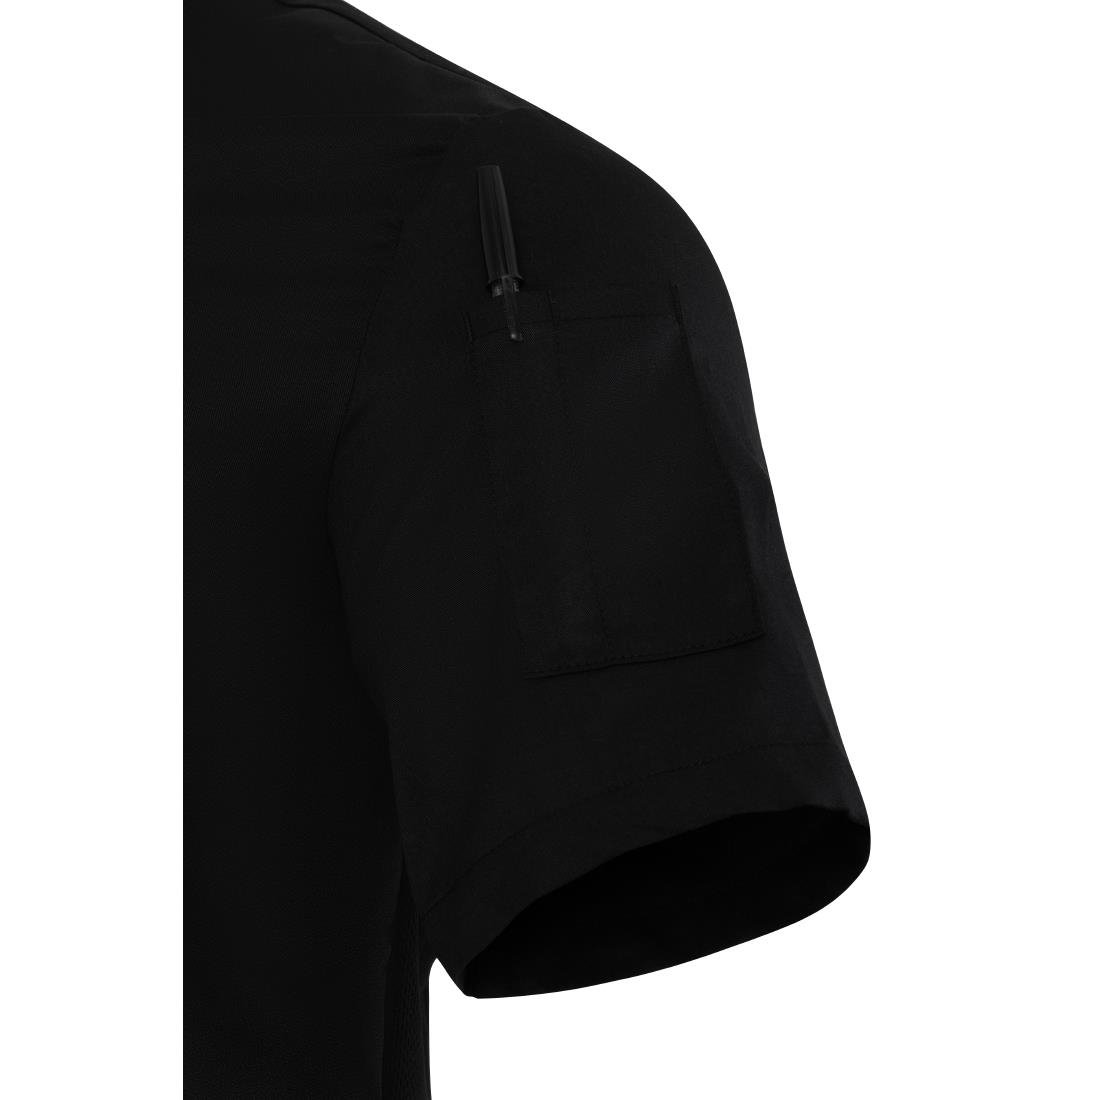 BA115-XL Southside Harlem Short Sleeve Chef Jacket Black Size XL